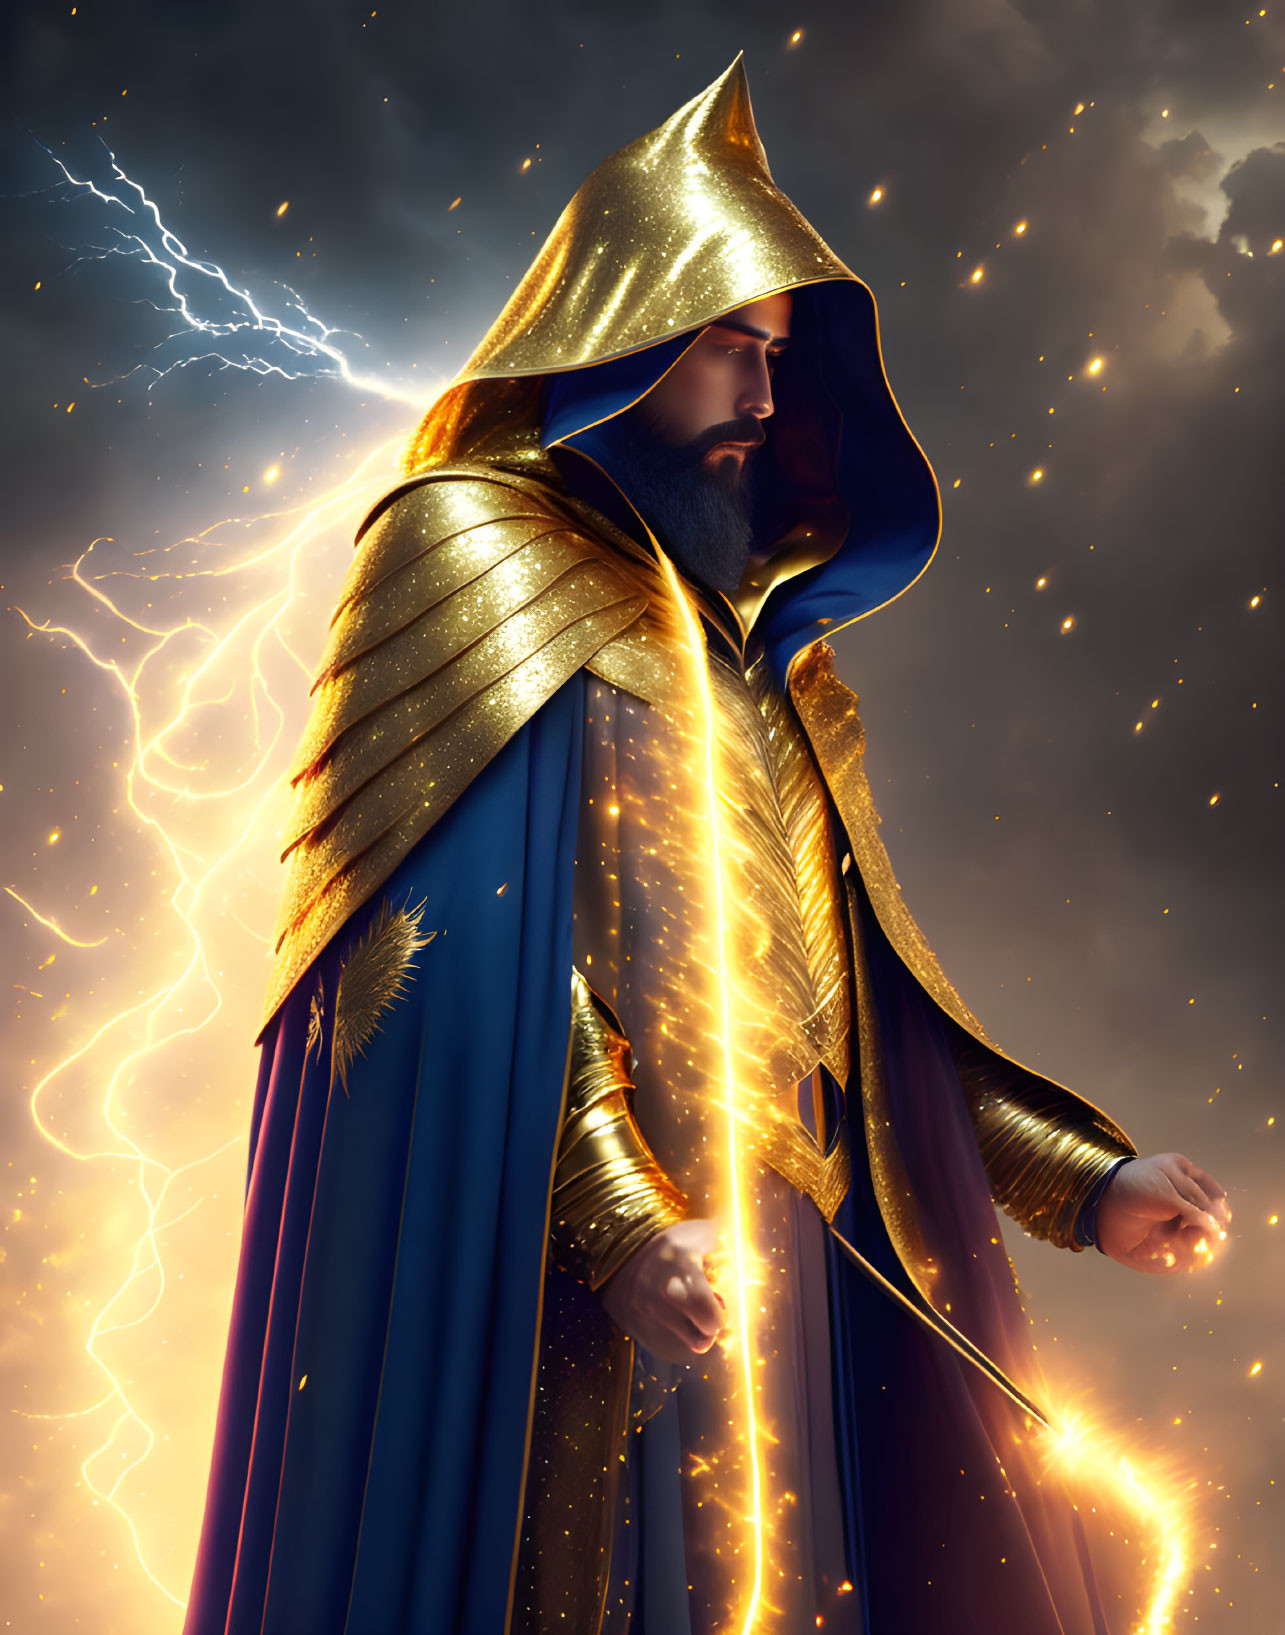 Majestic figure in golden hooded cloak against stormy backdrop